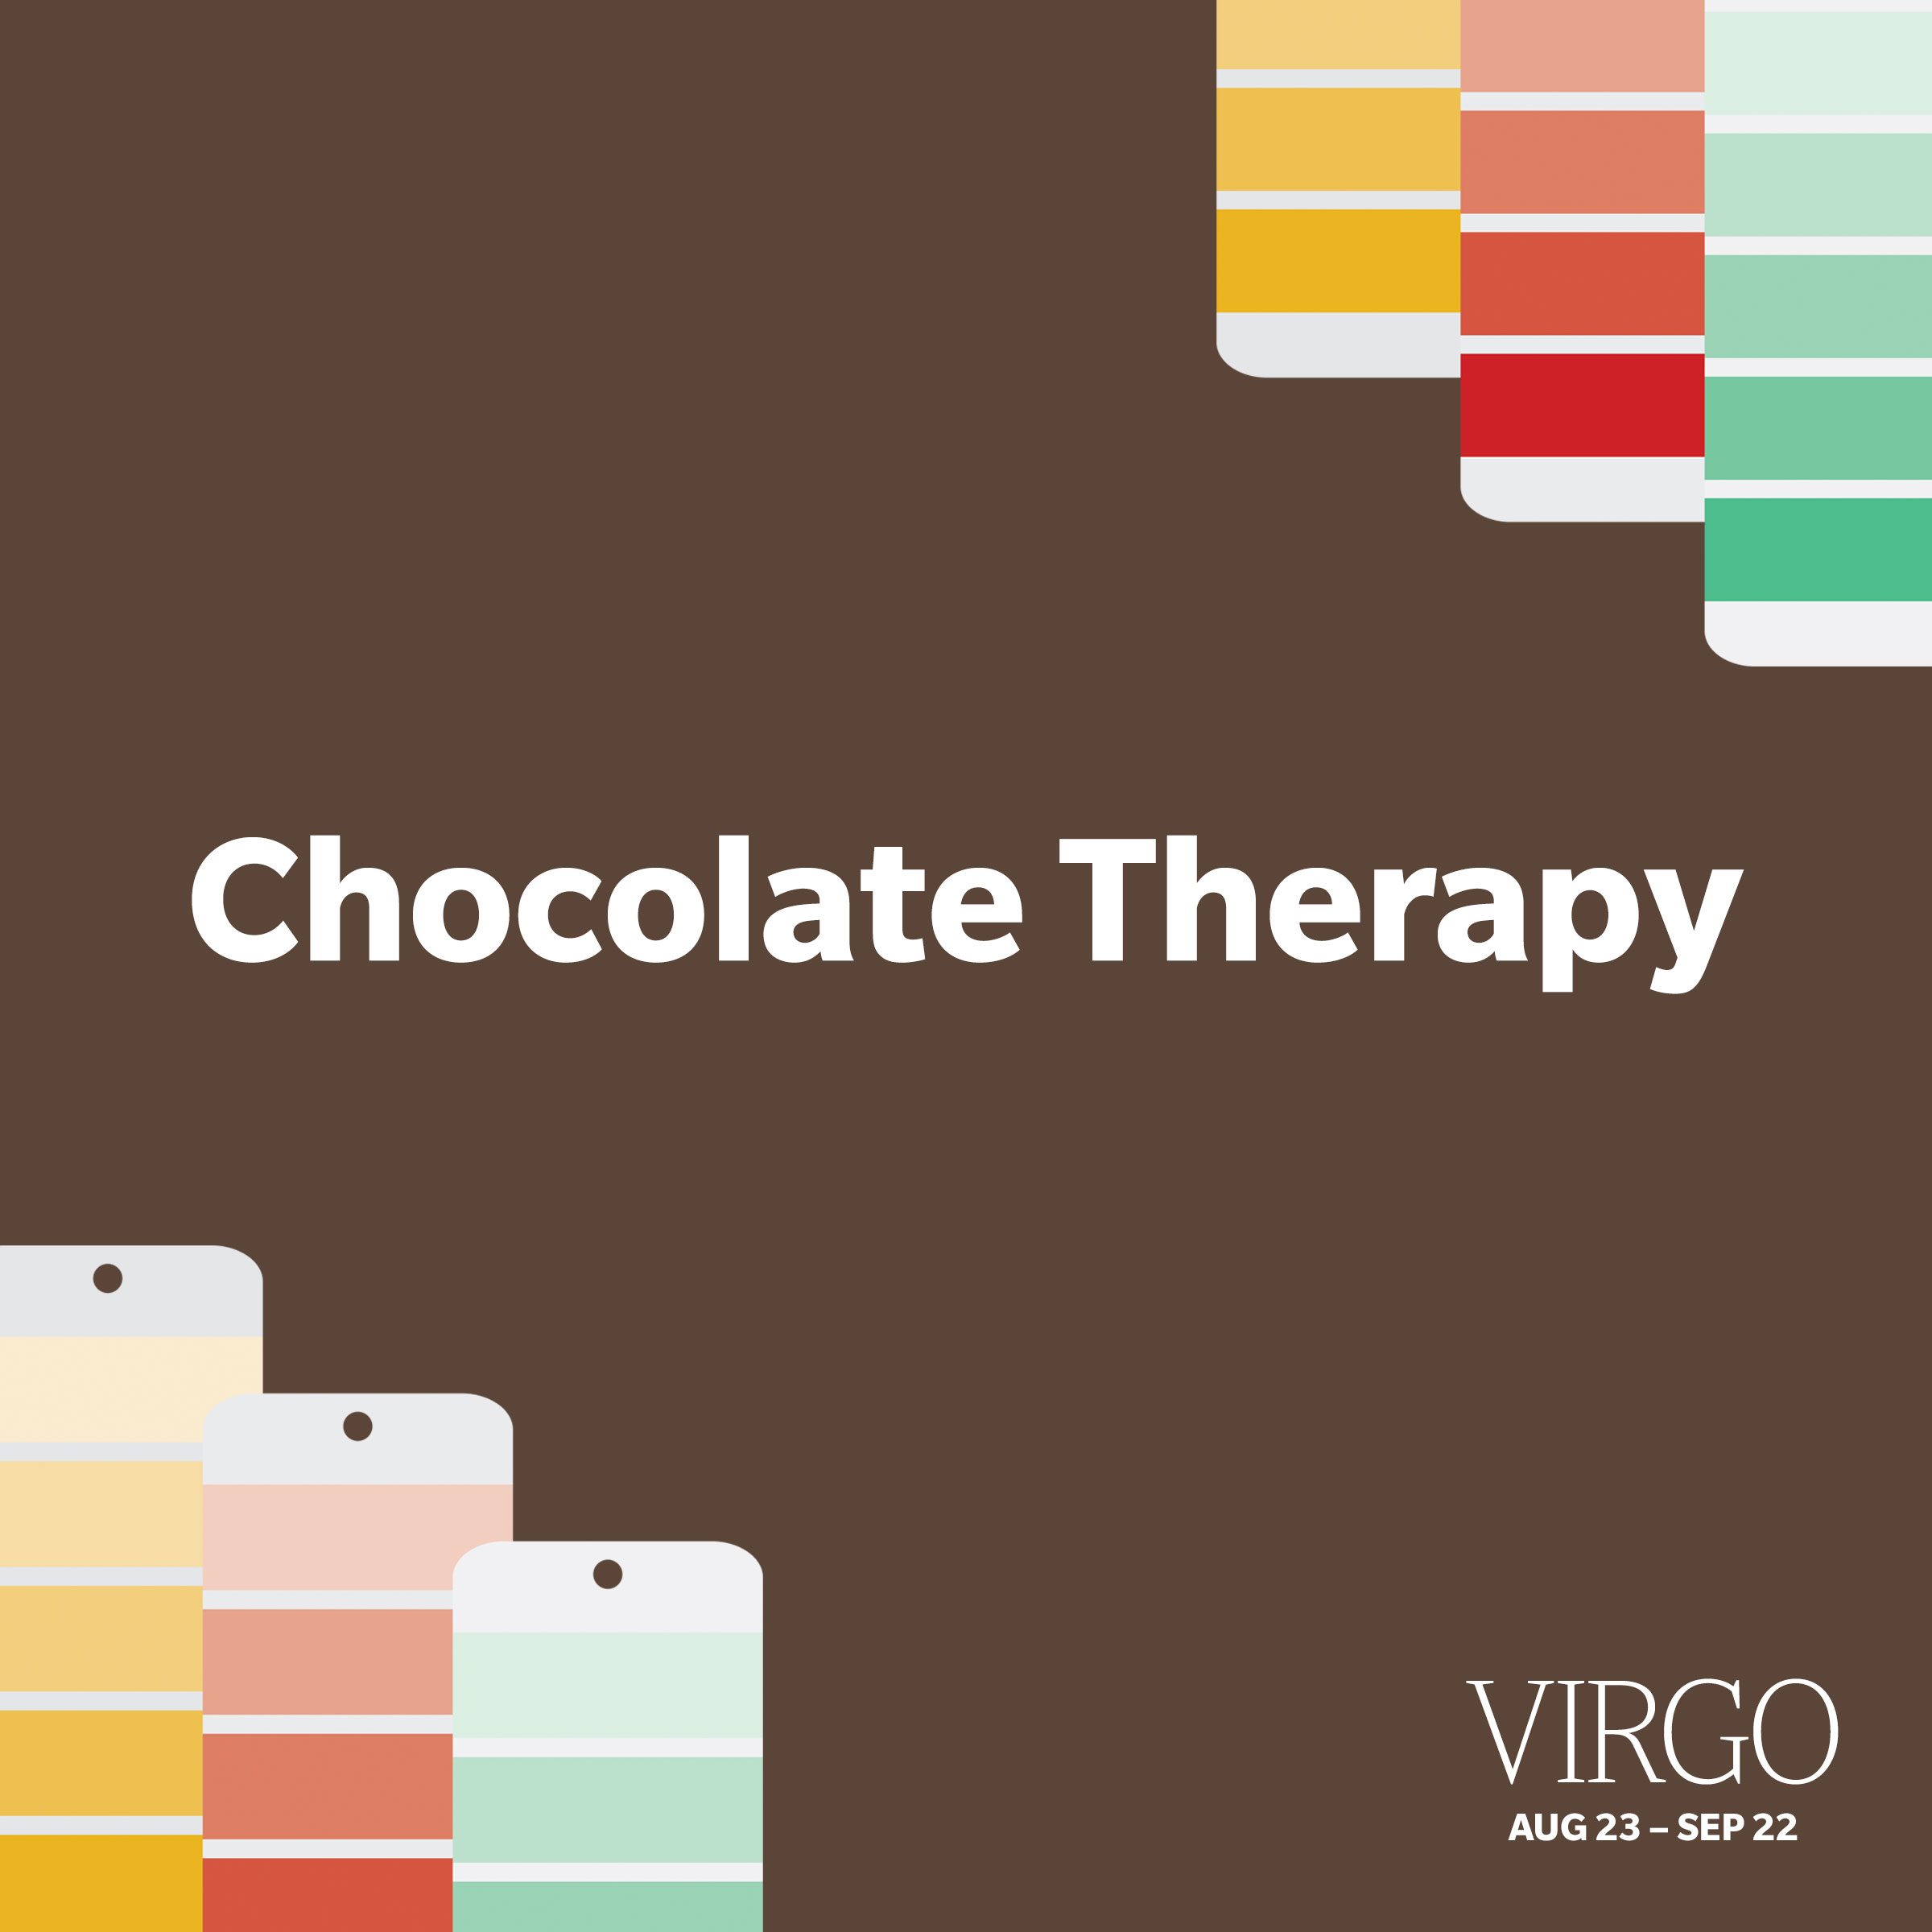 Virgo-ChocolateTherapy